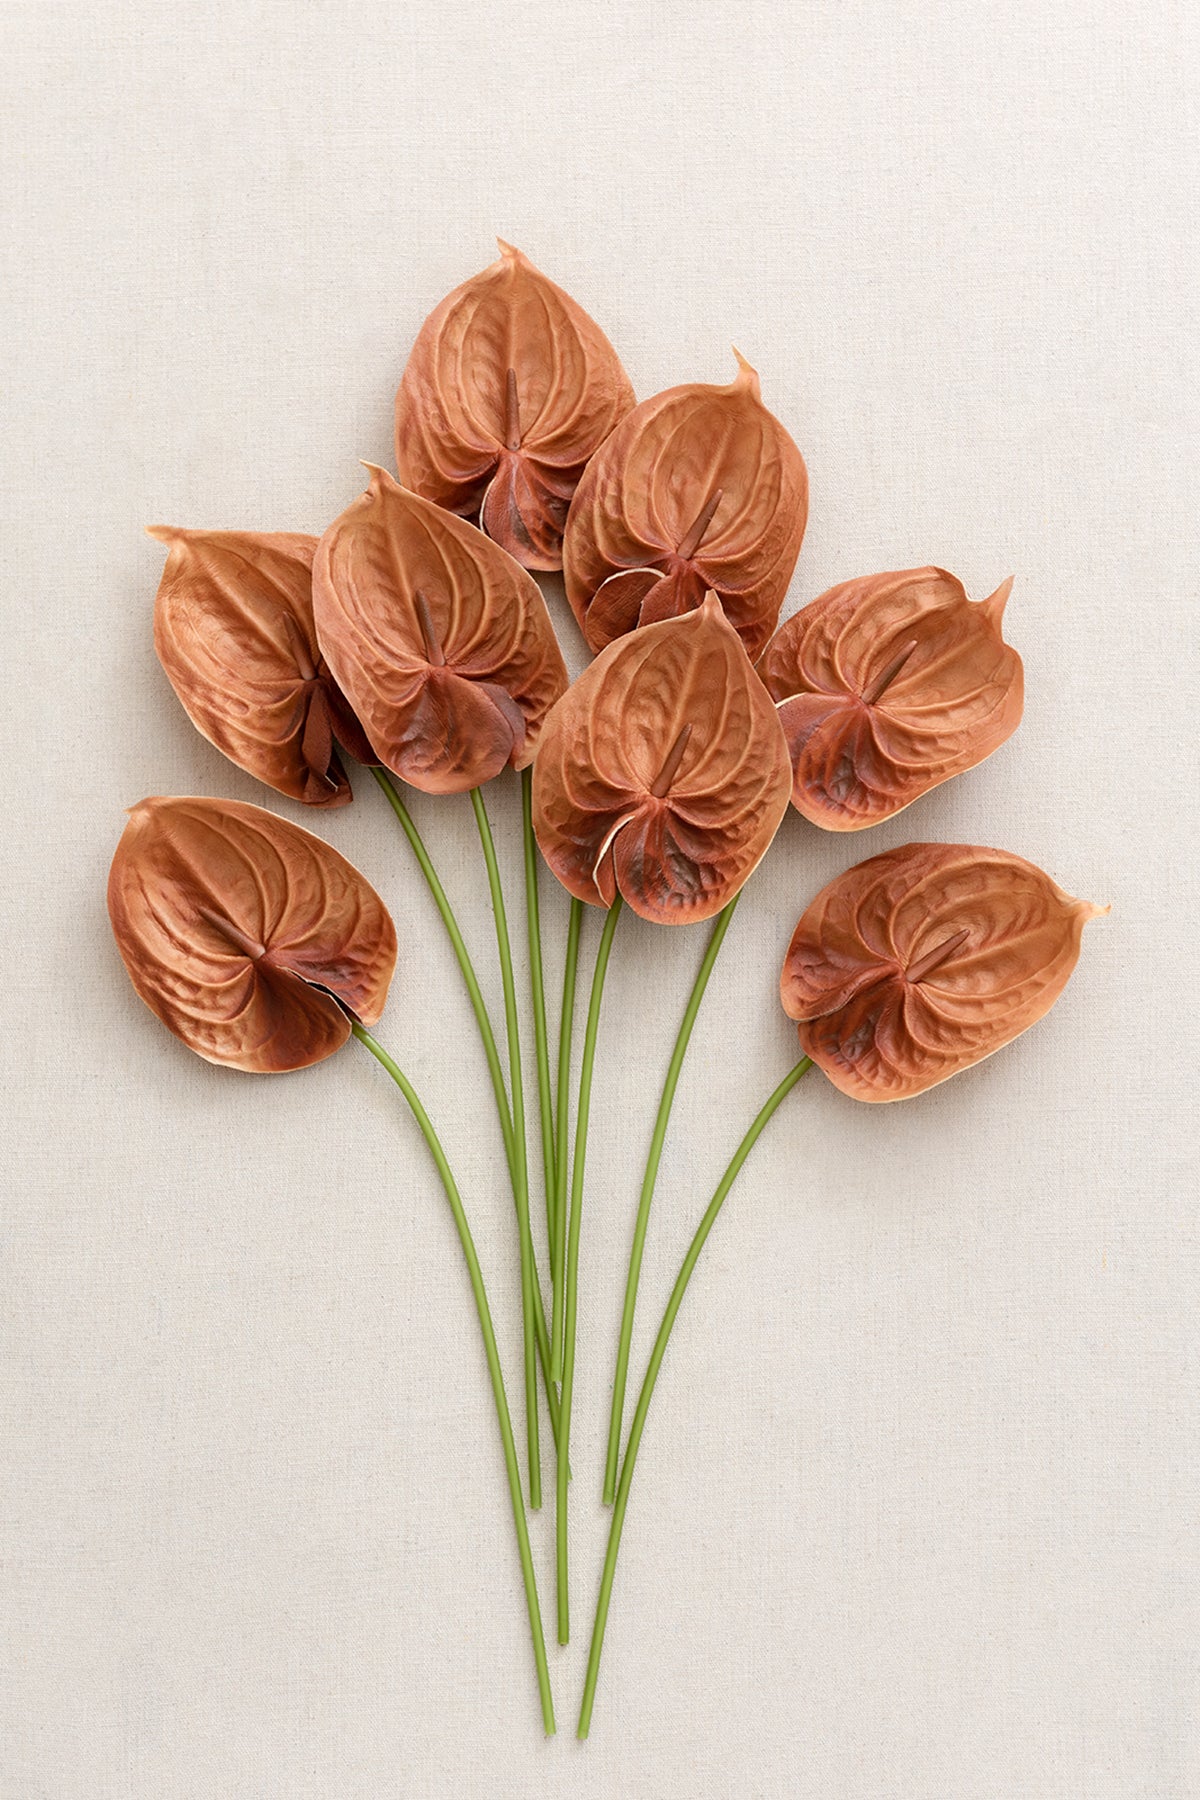 15" Anthurium Flowers with Stem - 4 Colors